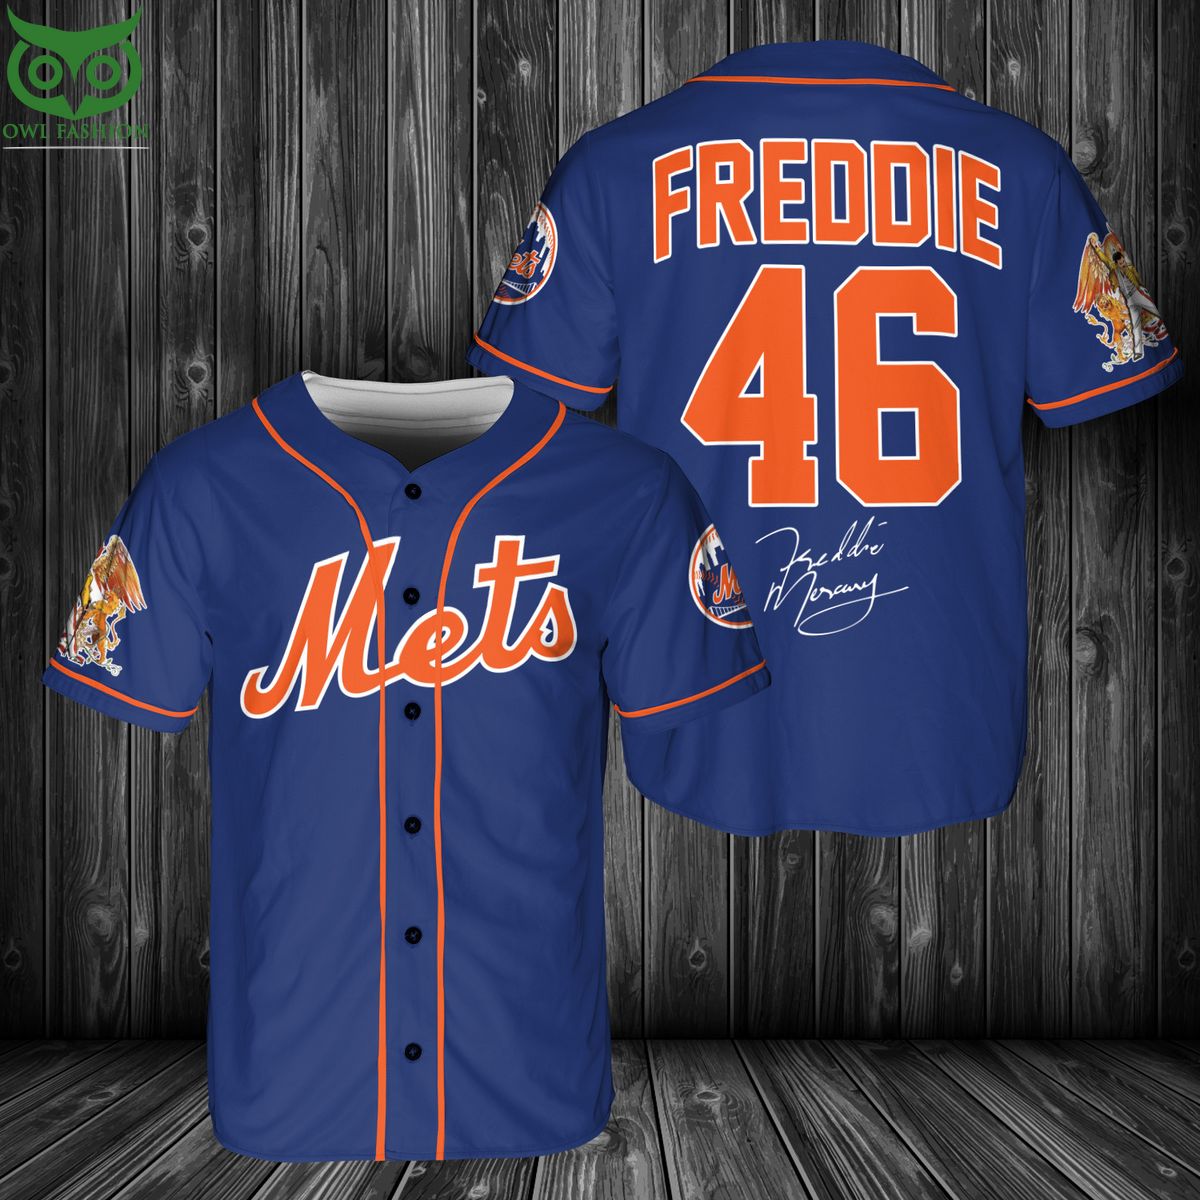 Freddie Mercury X New York Mets Baseball Jersey - Owl Fashion Shop